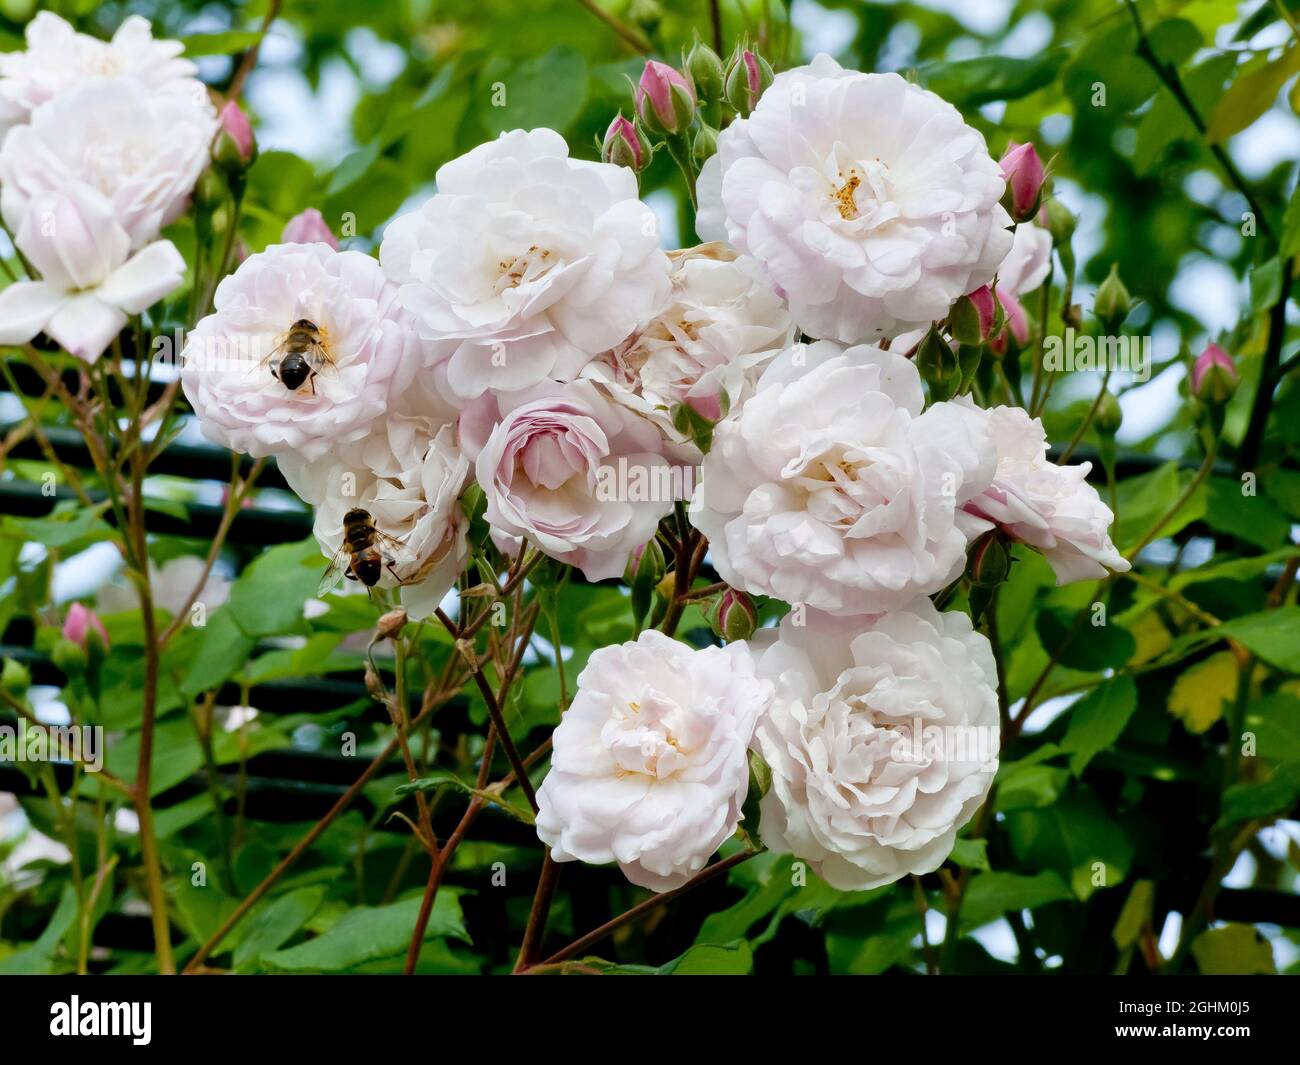 Rose tree 'Blush Noisette' in bloom in a garden Stock Photo